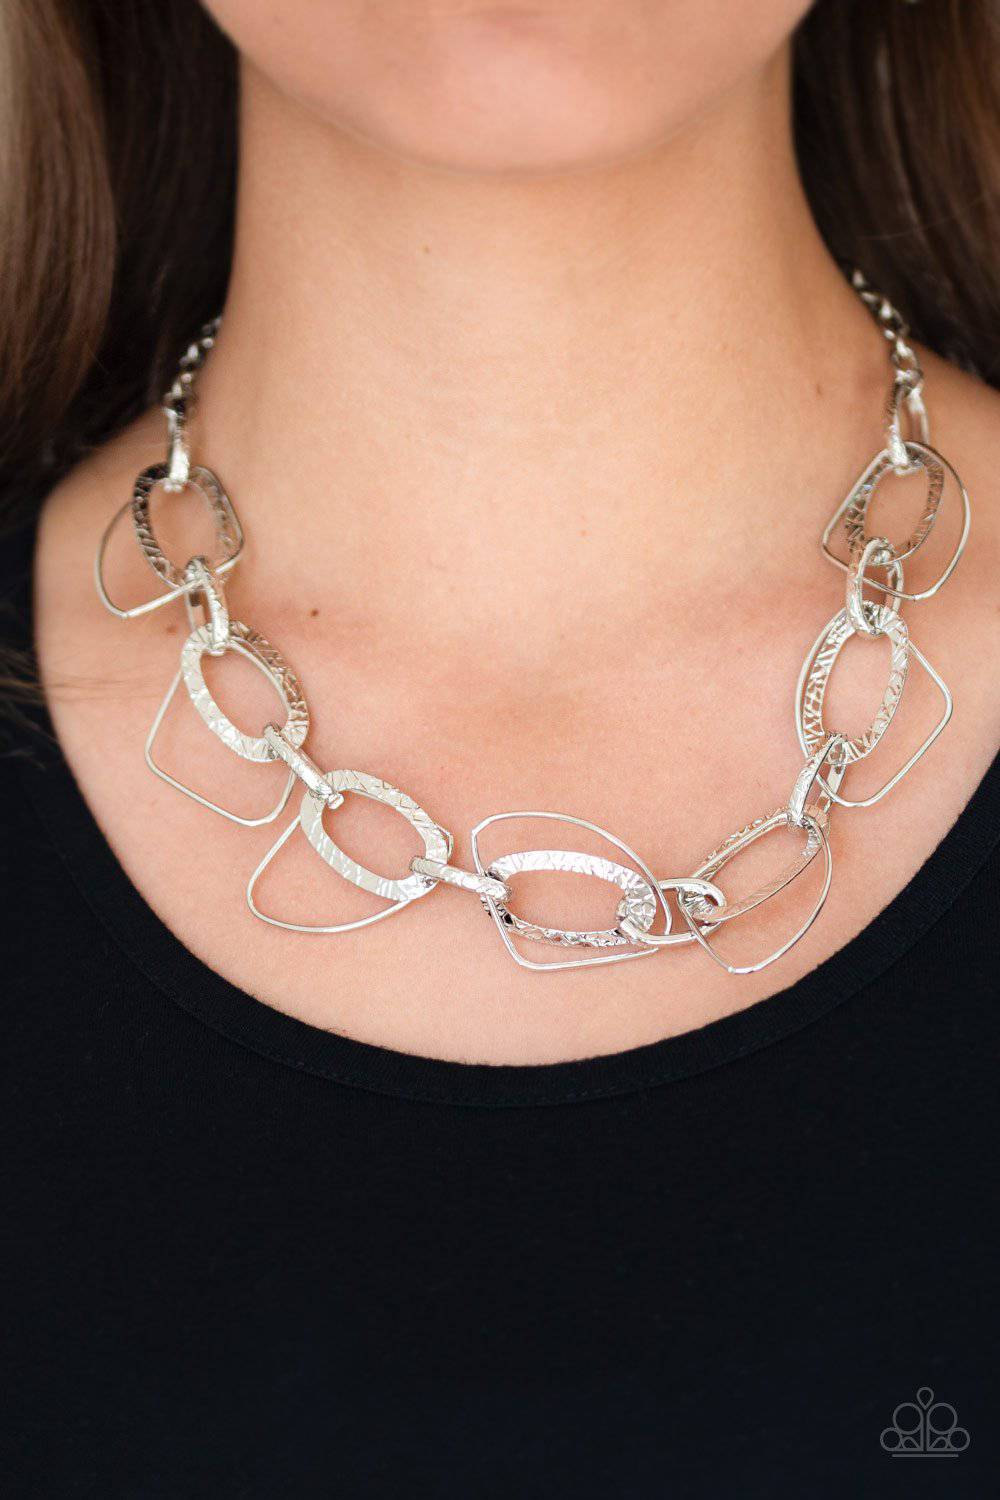 Very Avant-Garde - Silver Necklace - Paparazzi Accessories - GlaMarous Titi Jewels